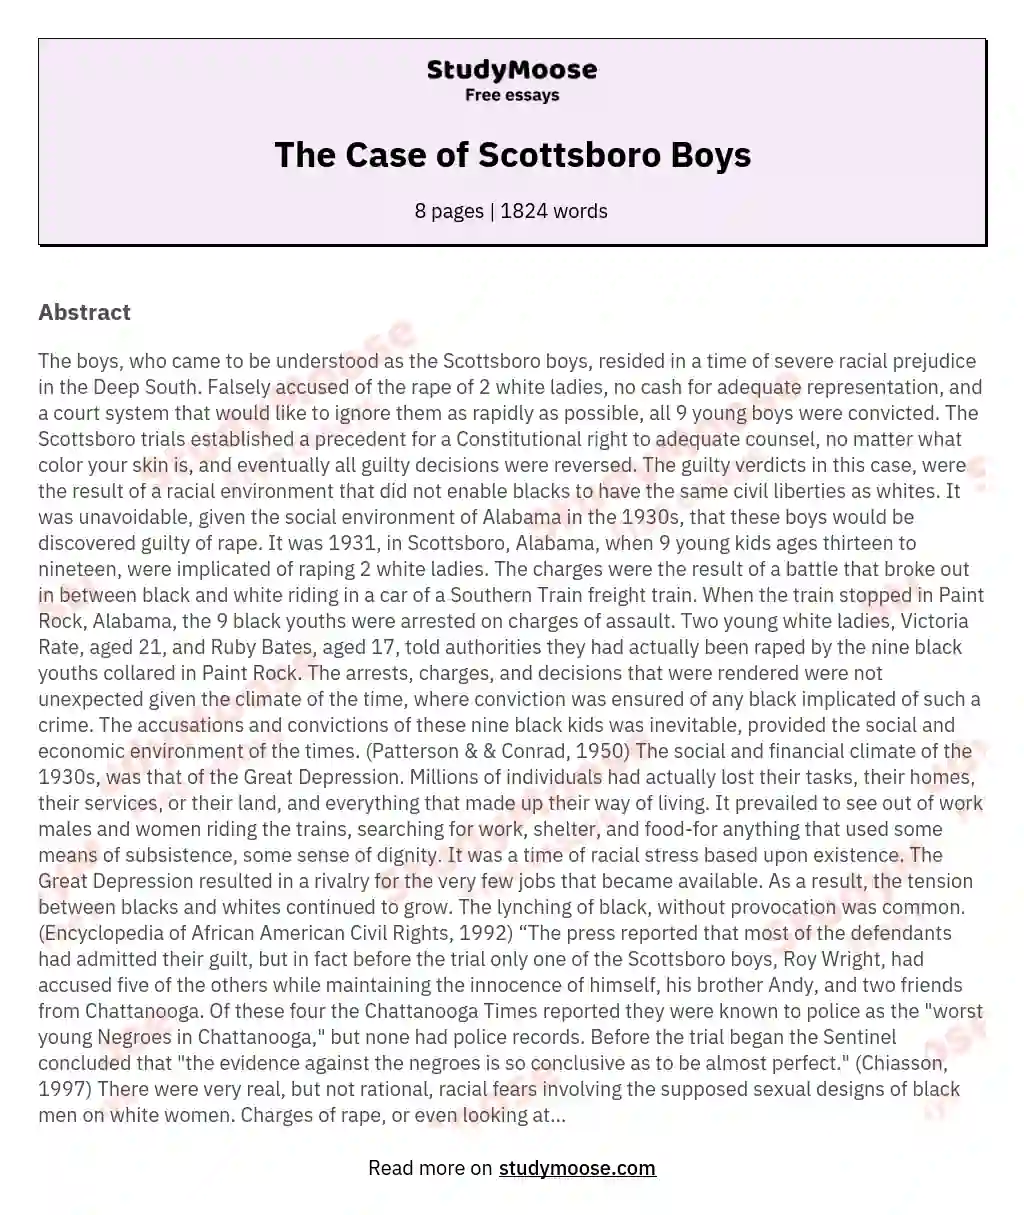 The Case of Scottsboro Boys essay